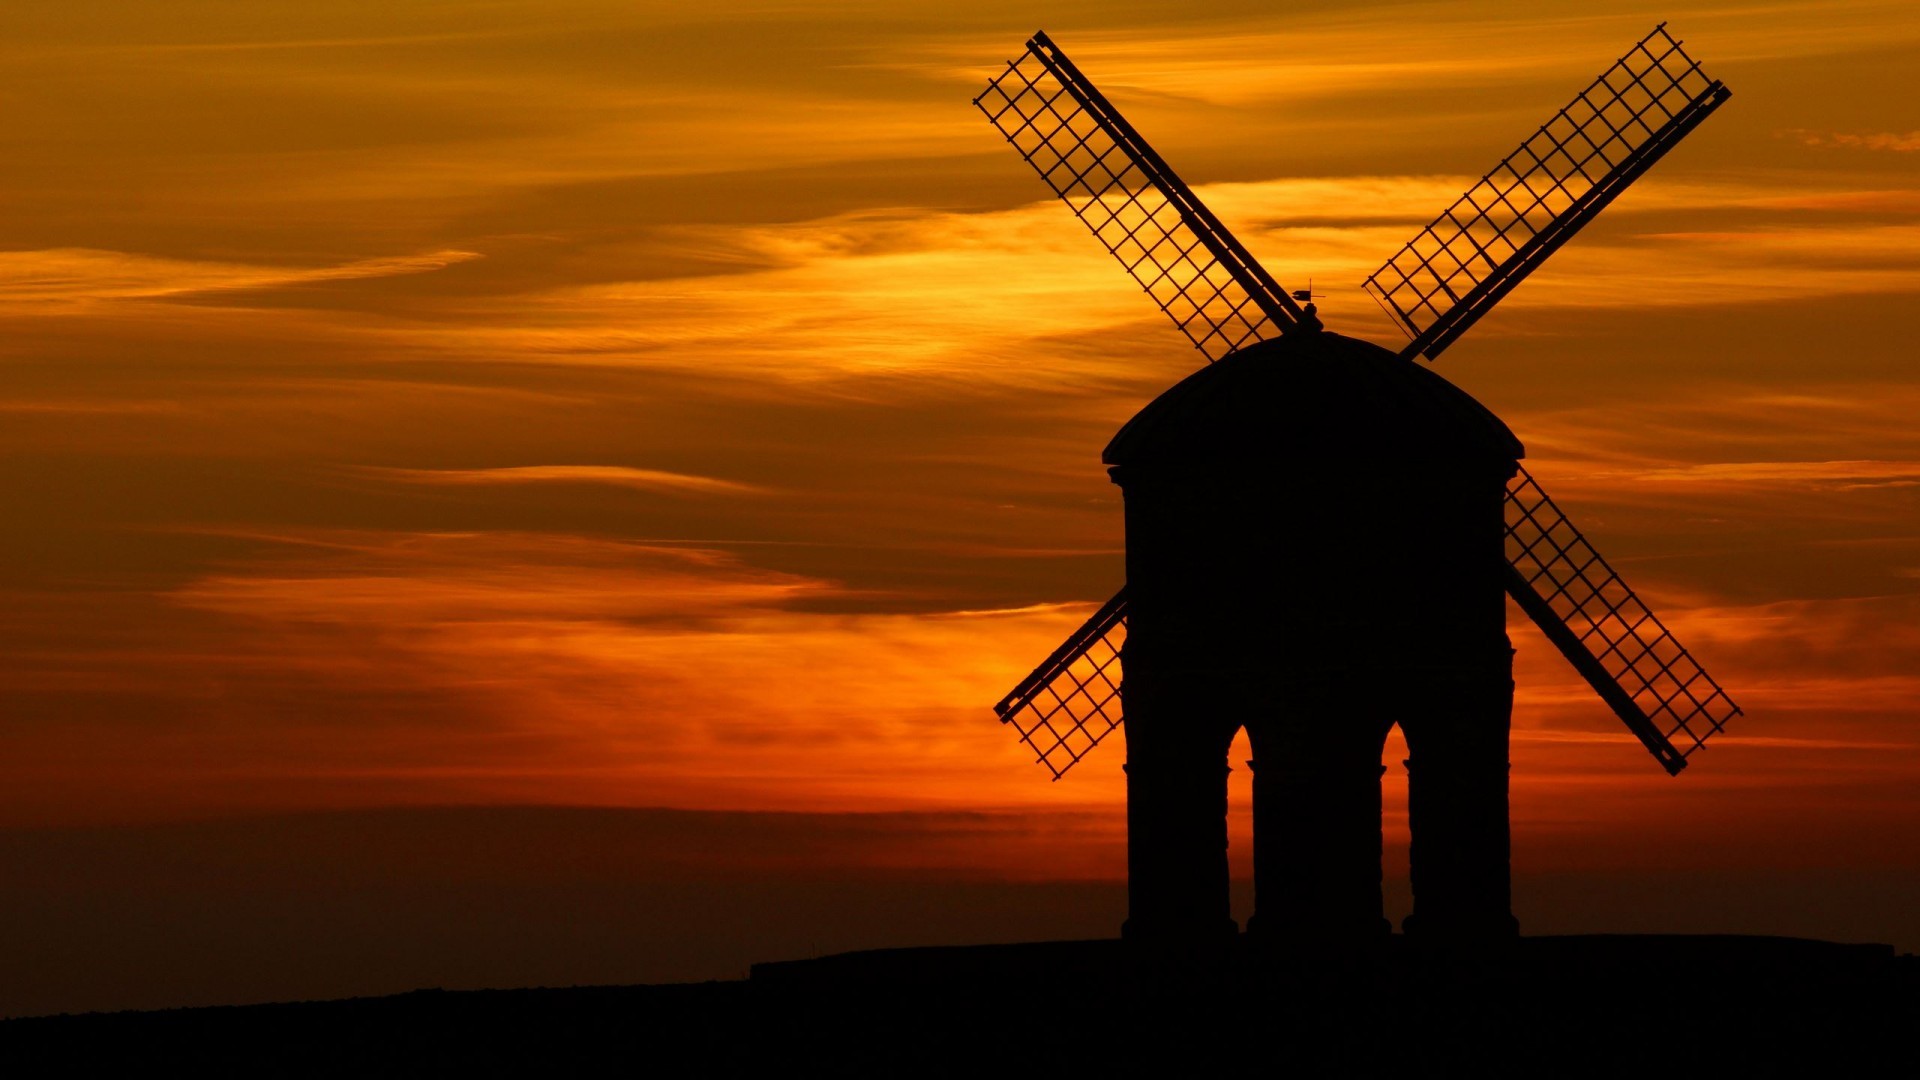 General 1920x1080 orange background sunset silhouette windmill landscape sky sunlight dark